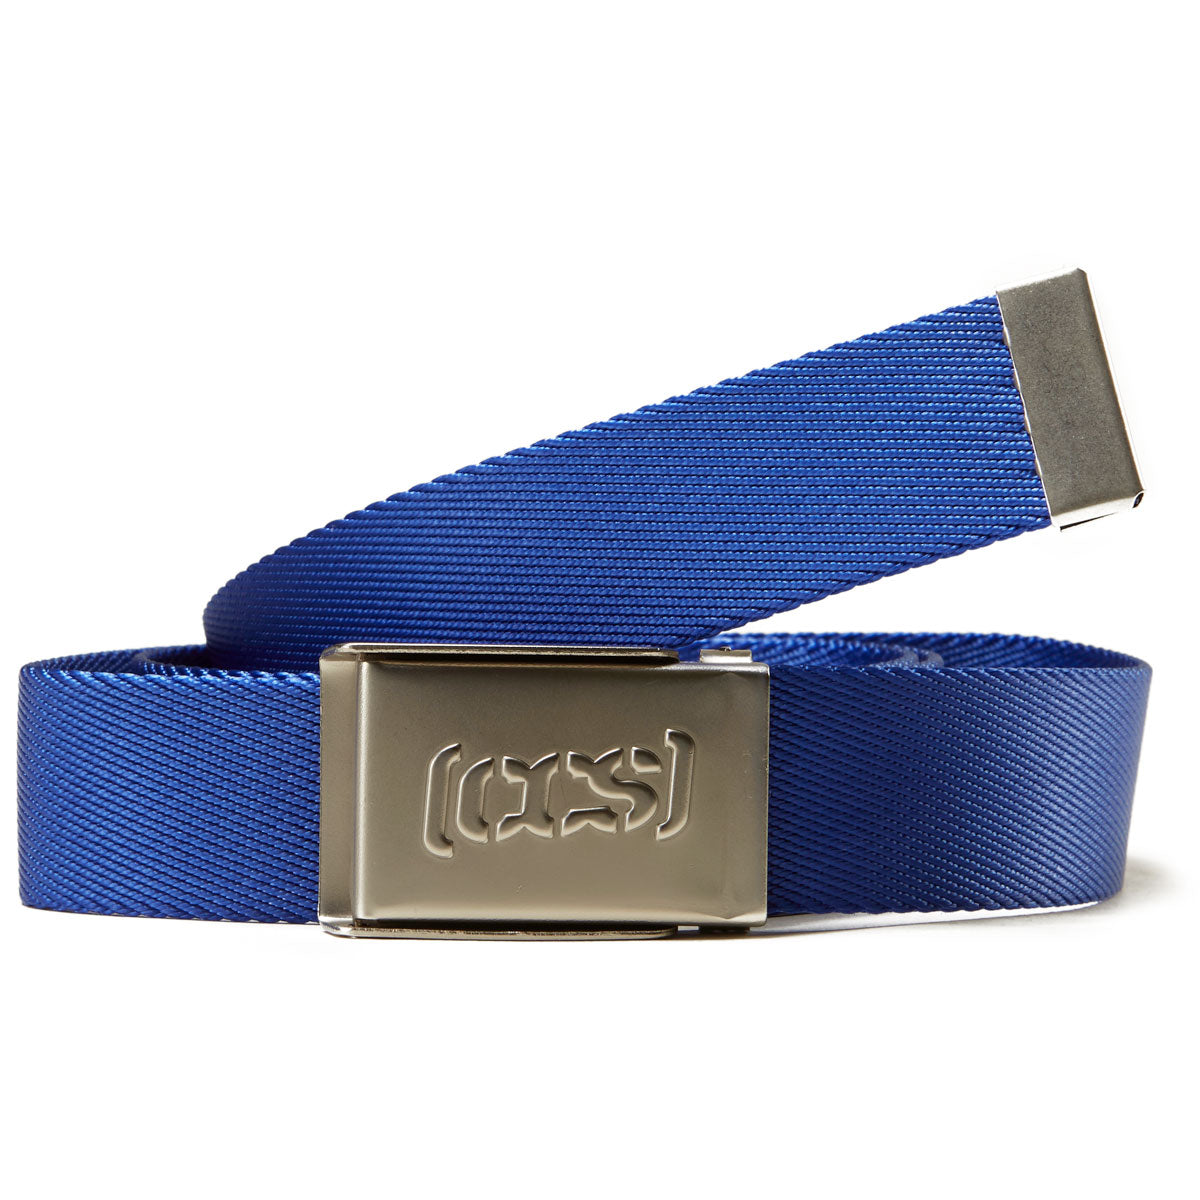 CCS Silver Logo Buckle Belt - Royal Blue image 1